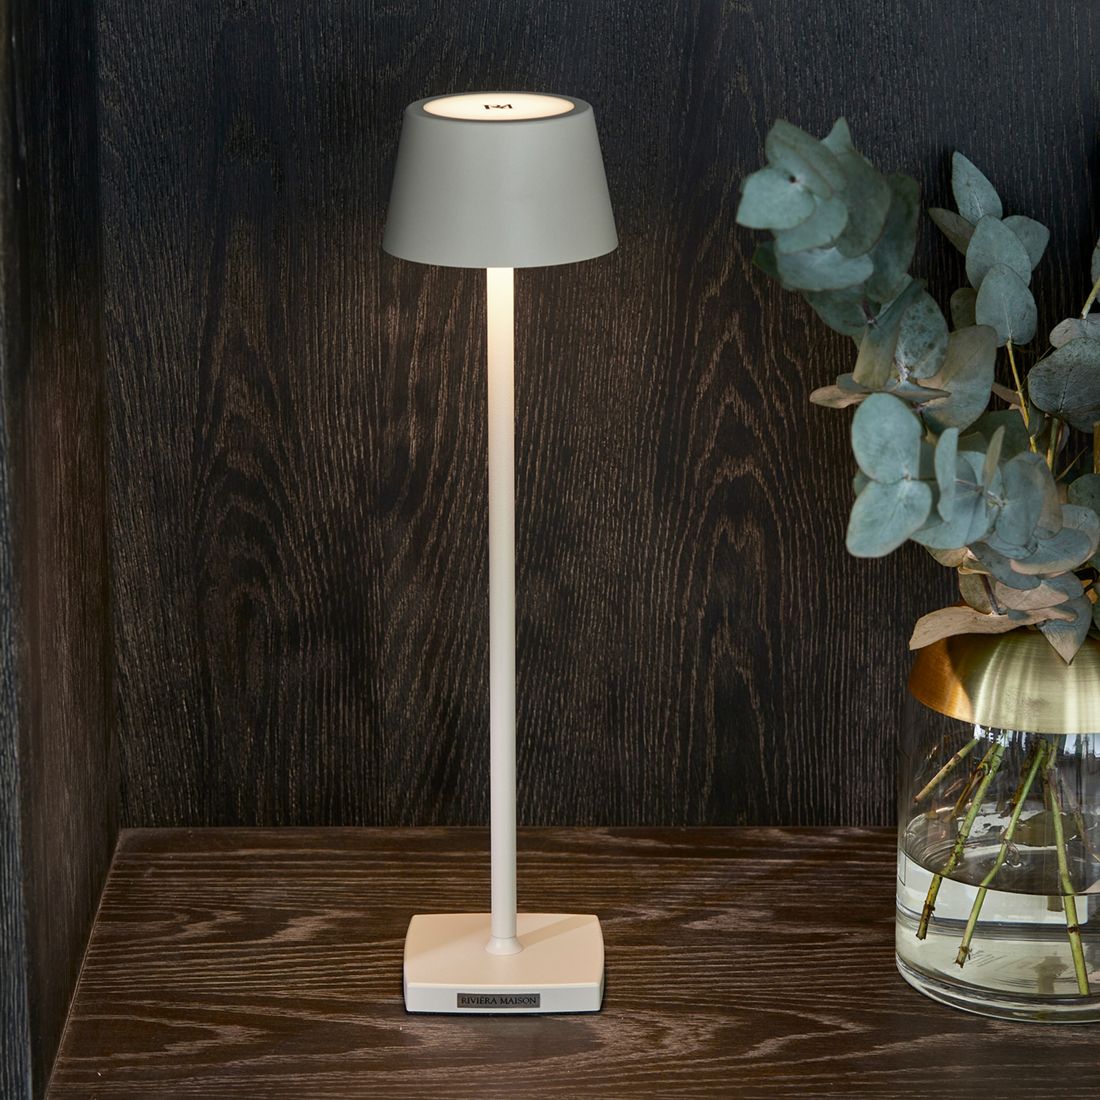 Luminee LED Lamp Micro USB flax maisonleonie